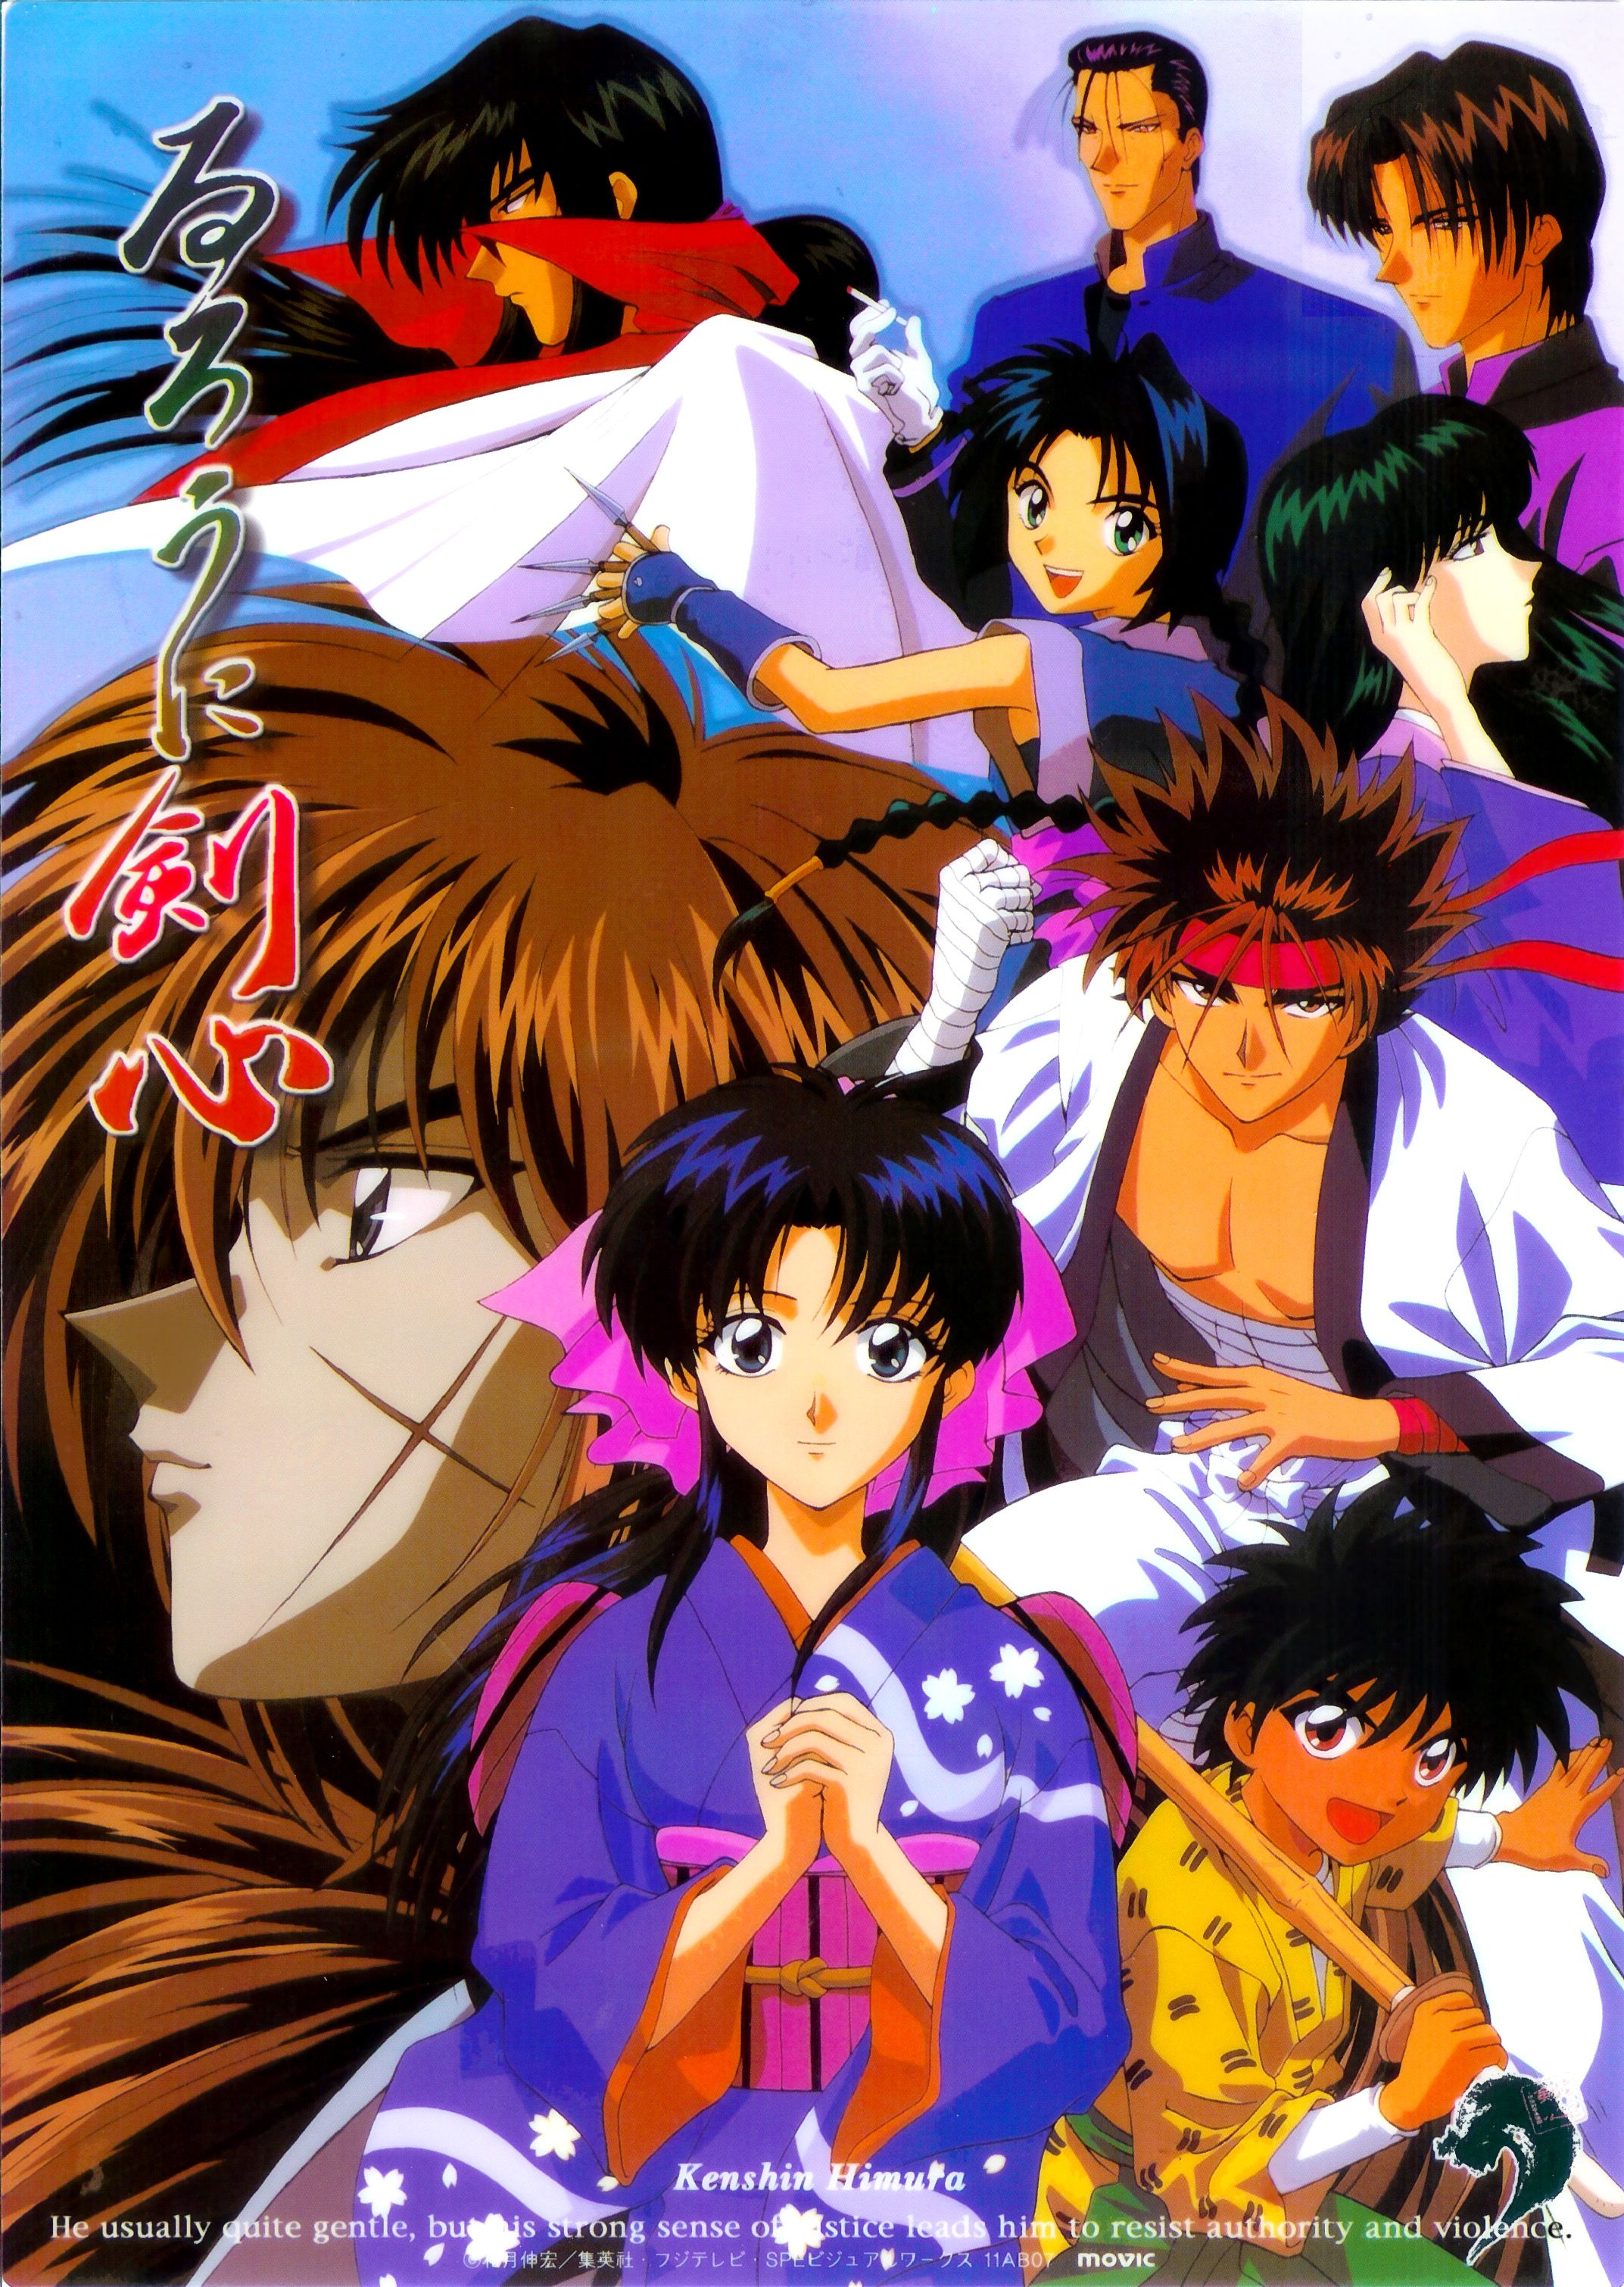 The cast of Rurouni Kenshin